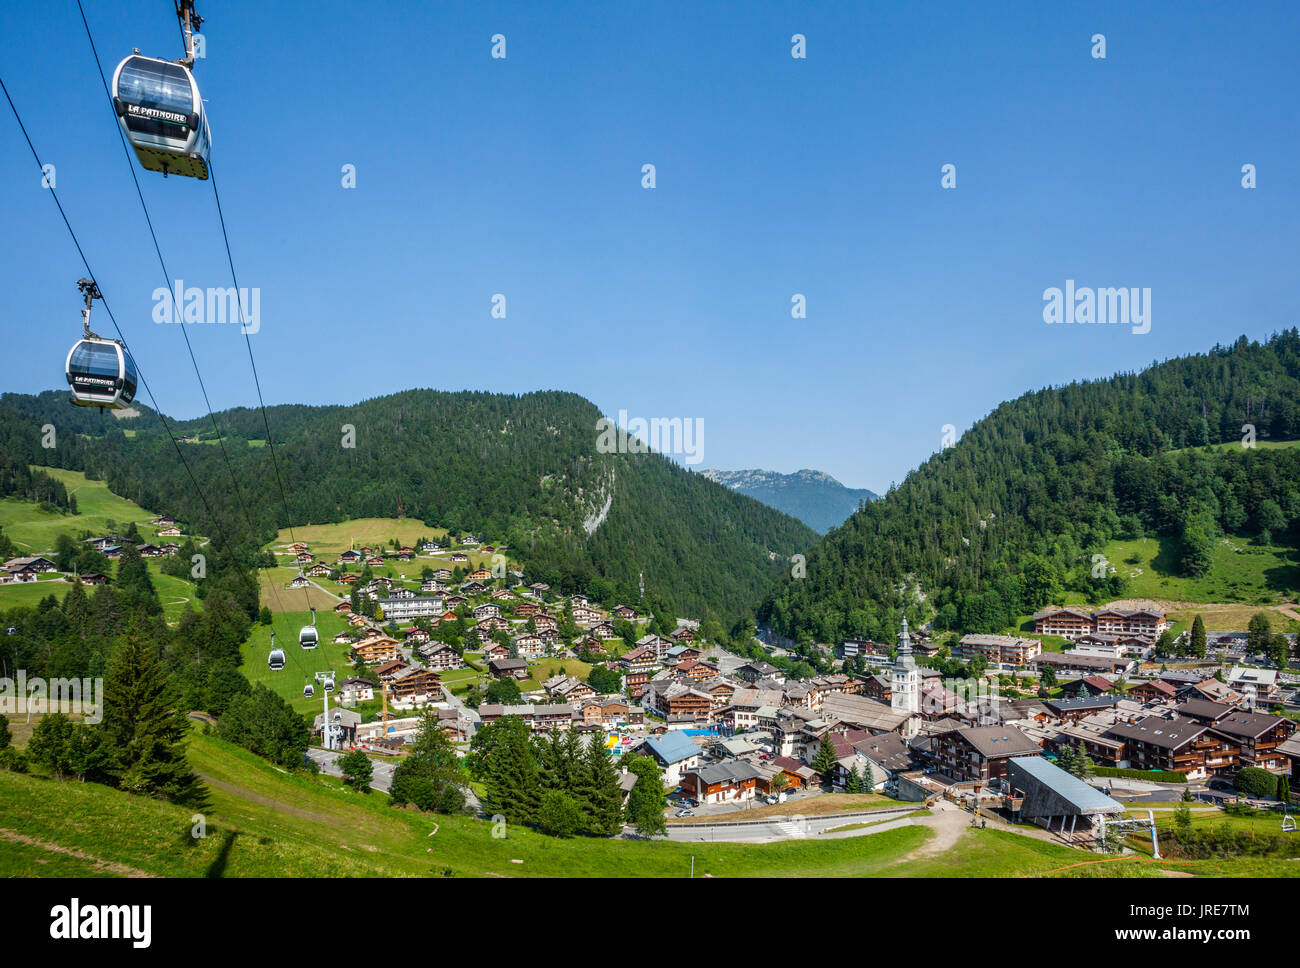 France, Haute-Savoie department, French Alps, Beauregard gondola lift at the alpine resort town of La Clusaz Stock Photo